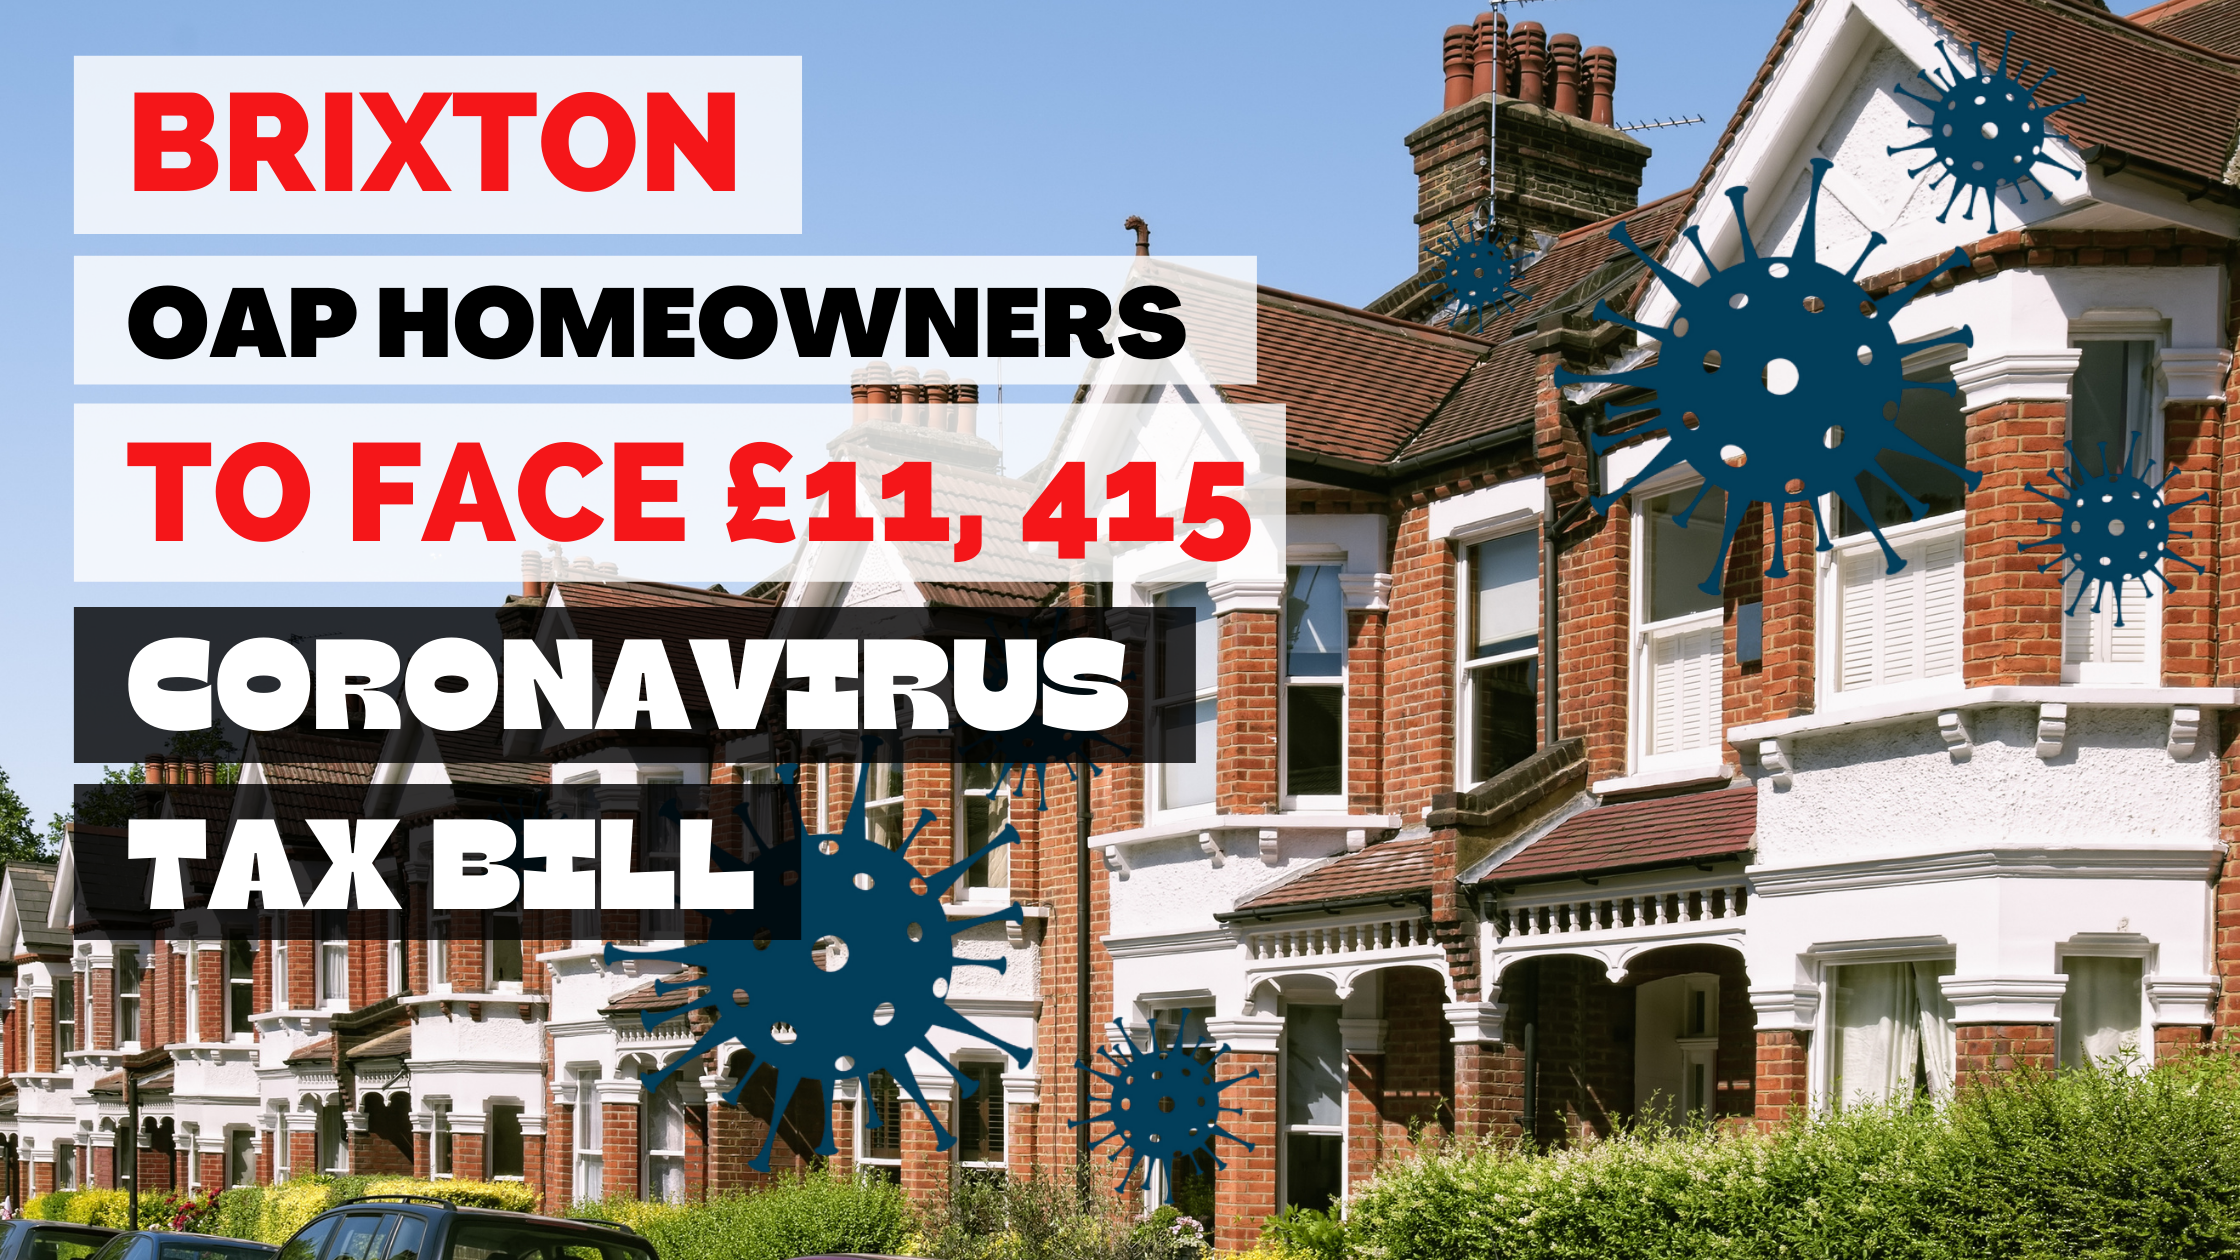 Brixton OAP Homeowners to Face £31,016 Coronavirus Tax Bill